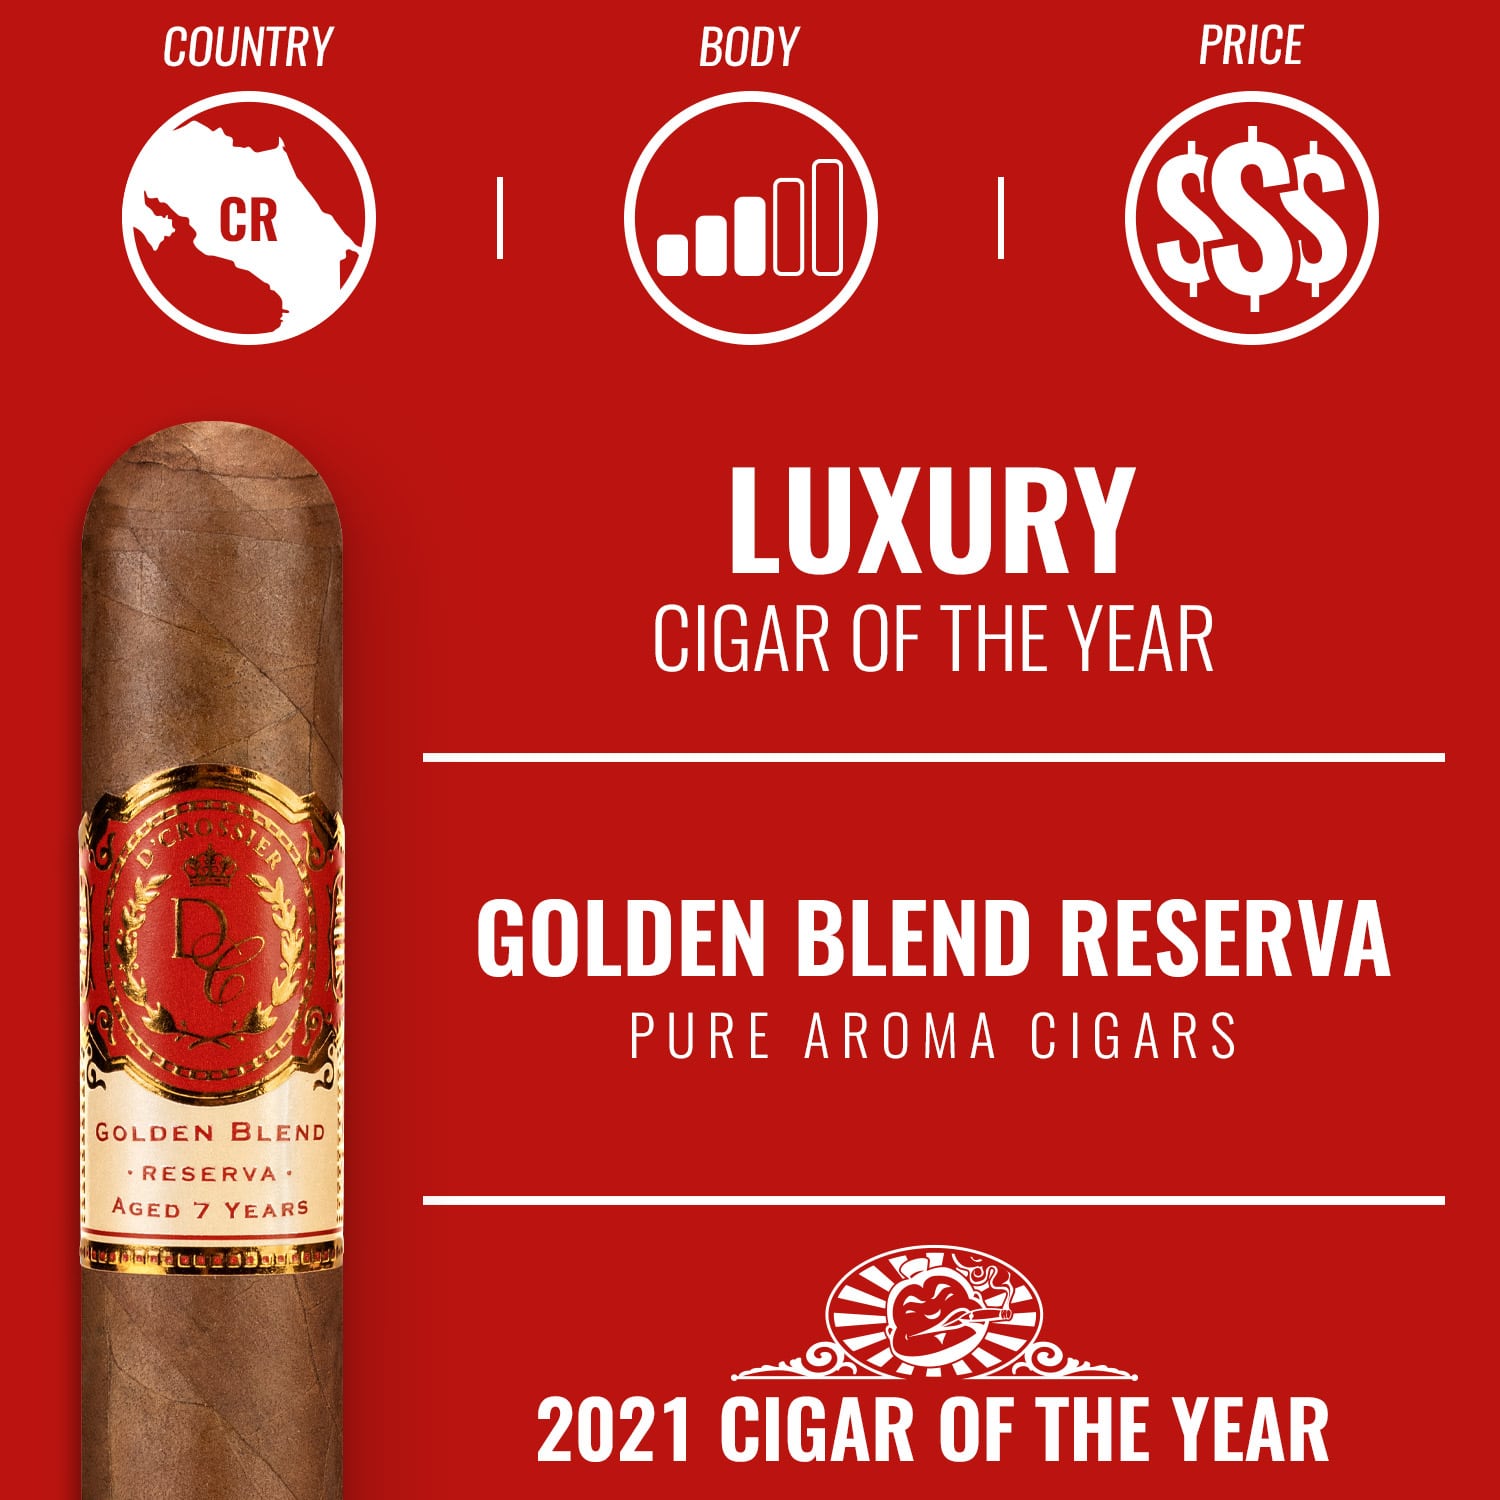 D'Crossier Golden Blend Reserva Luxury Cigar of the Year 2021